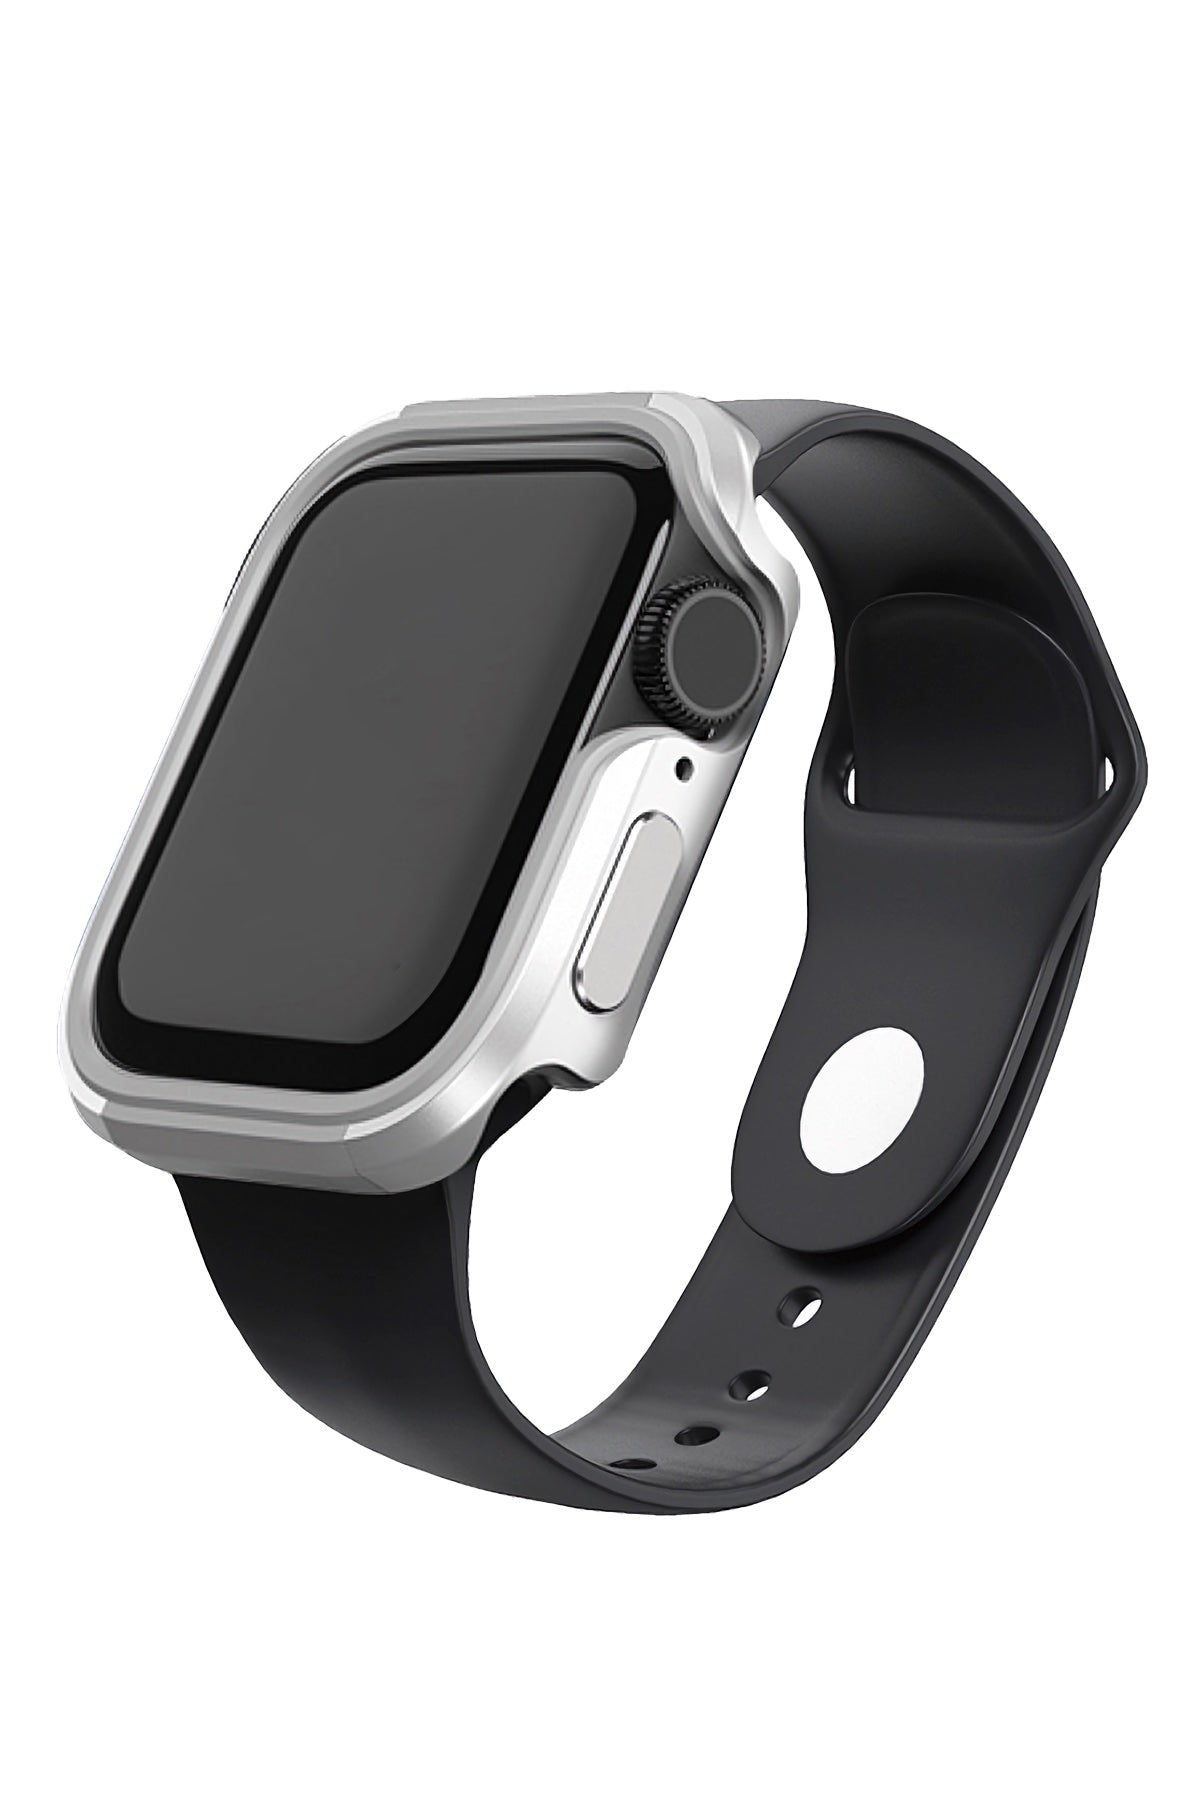 Wiwu Defense Apple Watch Compatible Case Protector Gray 